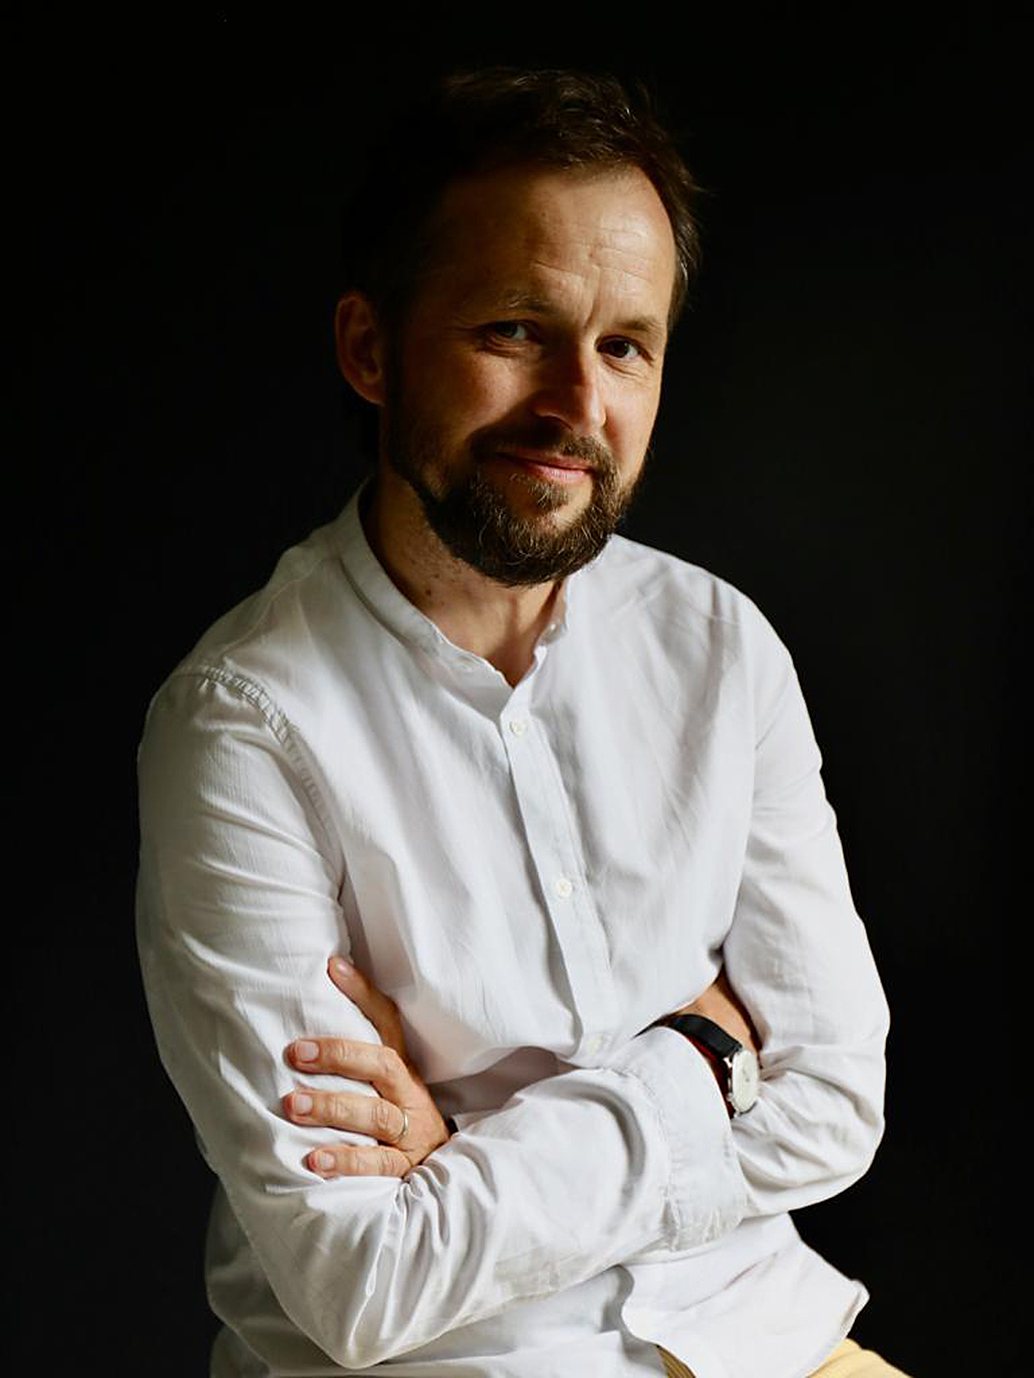 Jakub Nowak